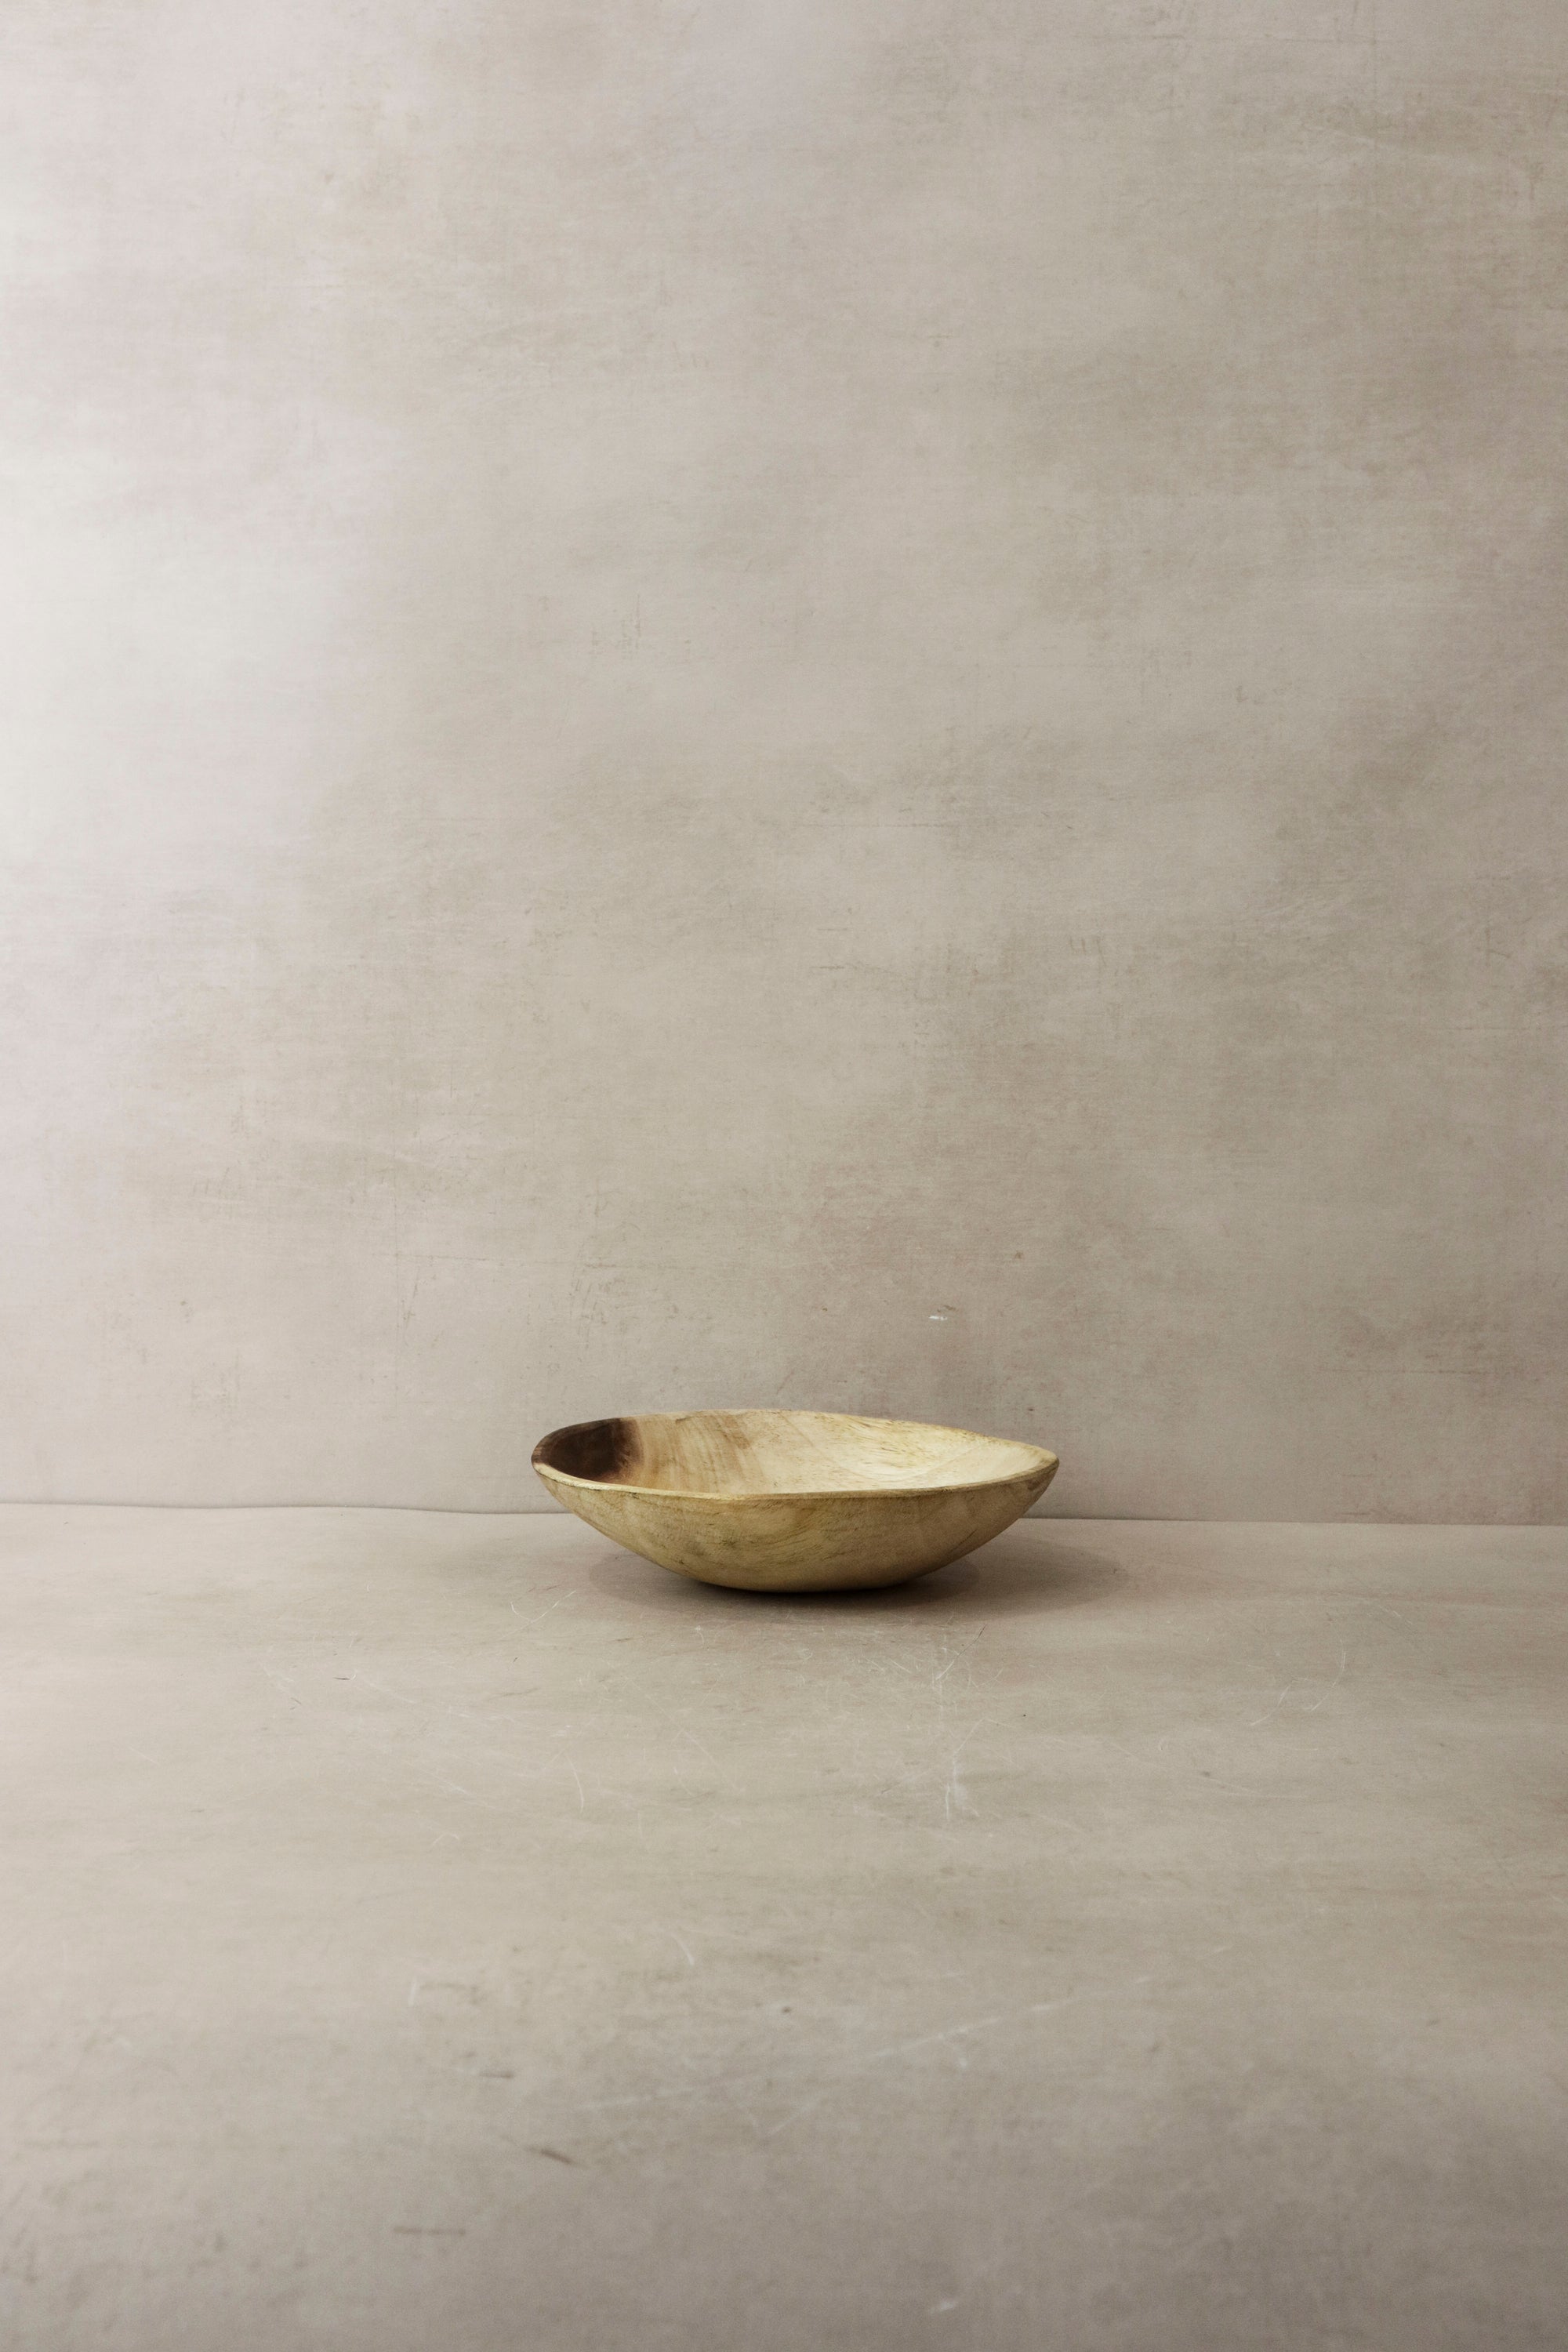 Handmade wooden bowl, Zimbabwe - 12.7